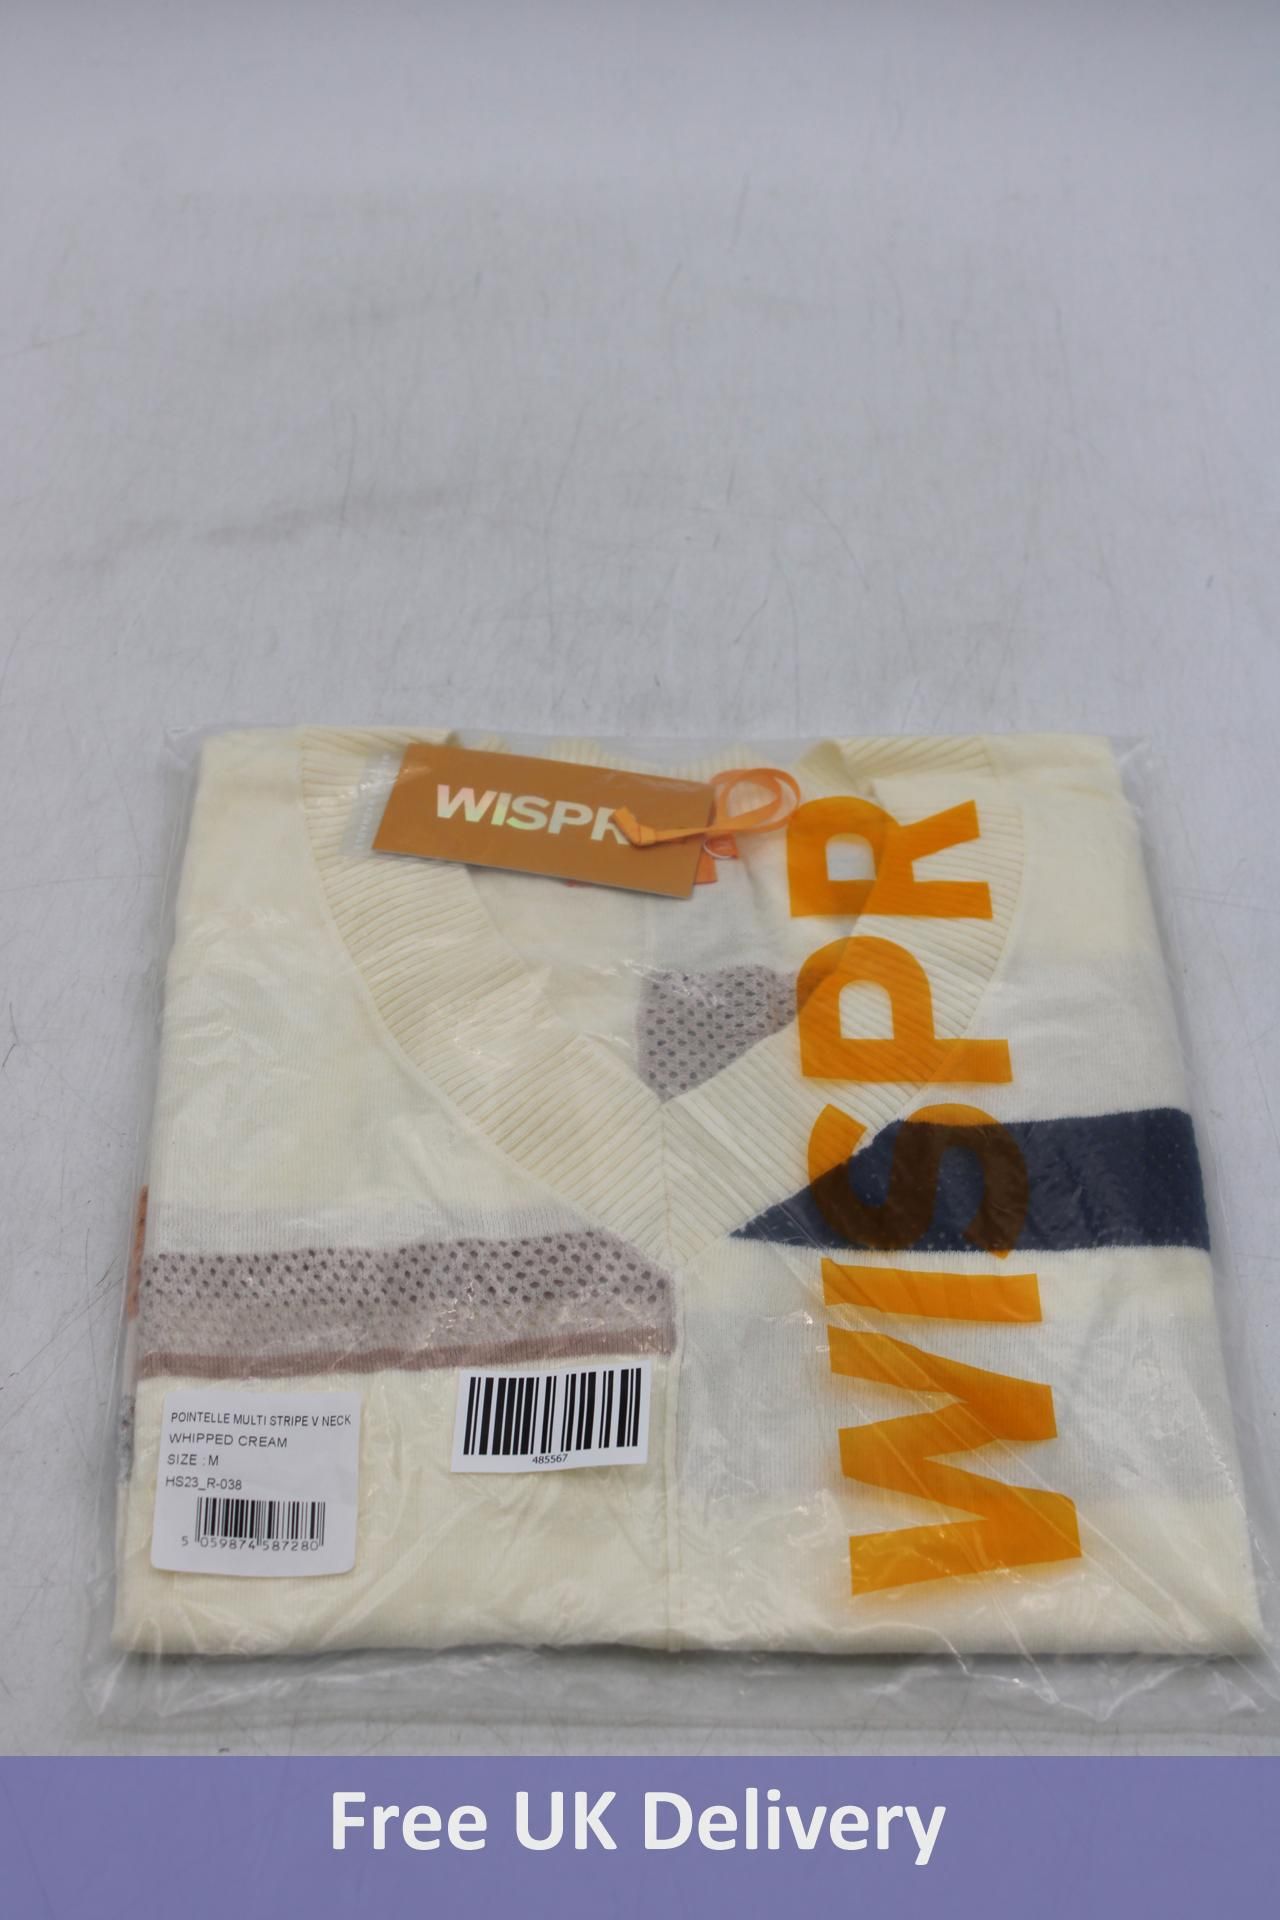 WISPR Pointelle Multi Stripe V Neck Top, Whipped Cream/Beige/Blue, Size M